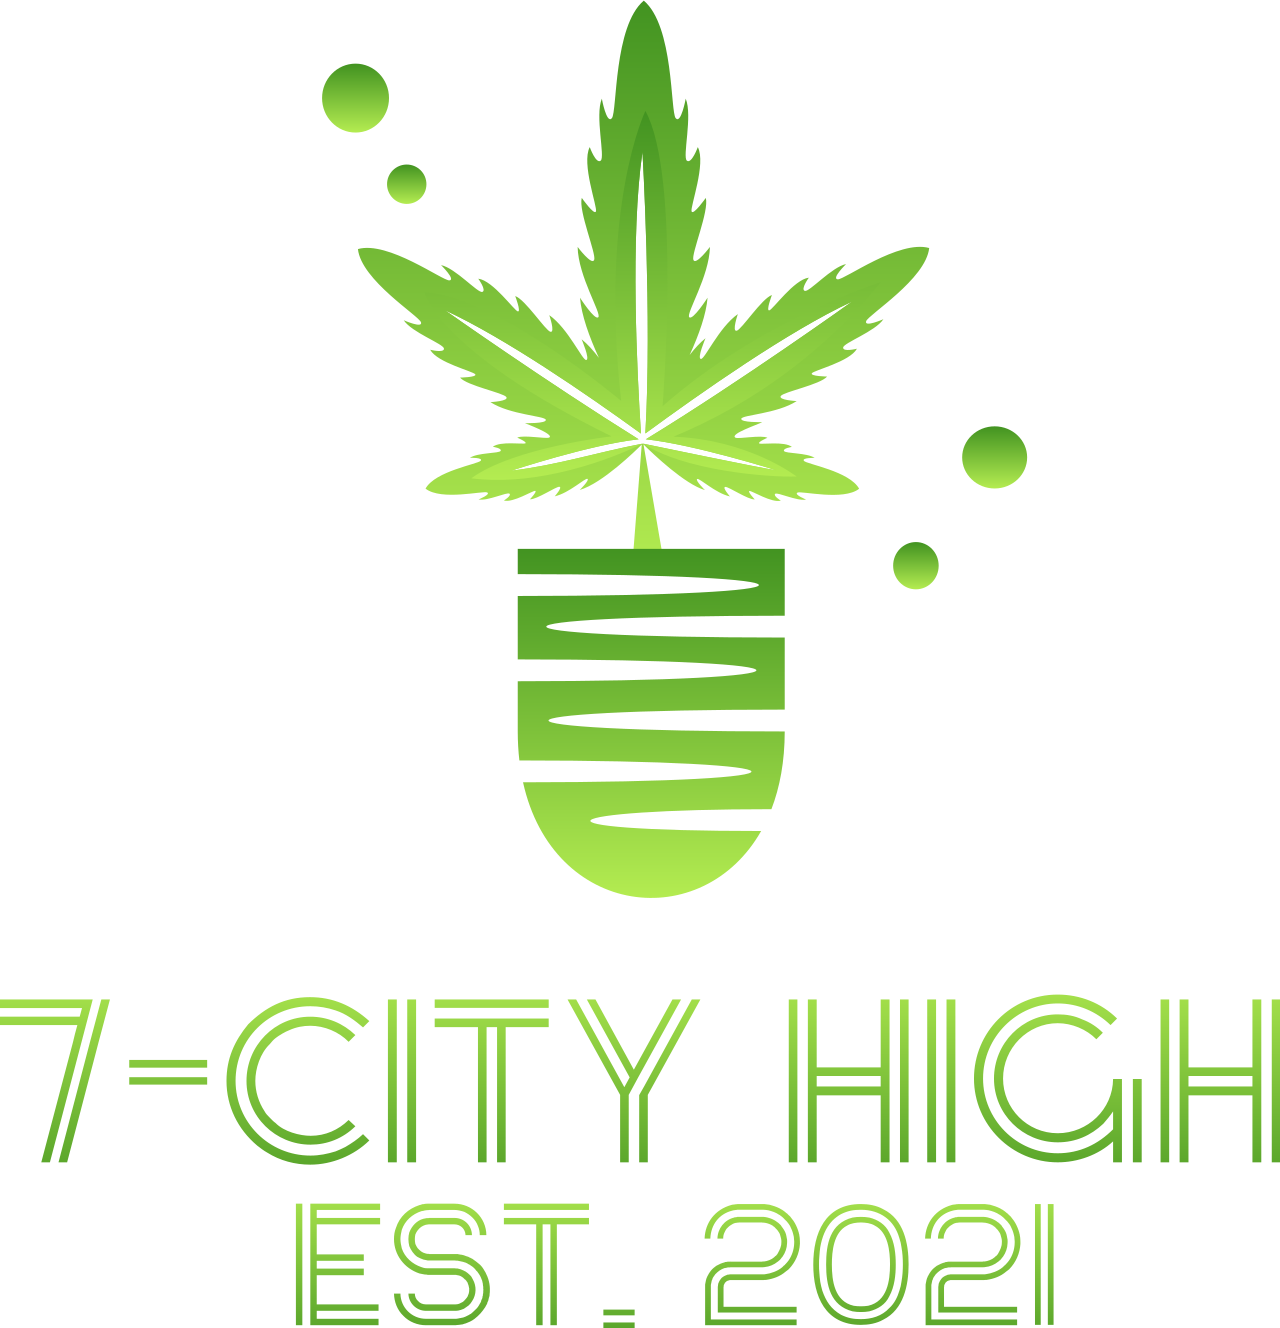 7-city high 's web page